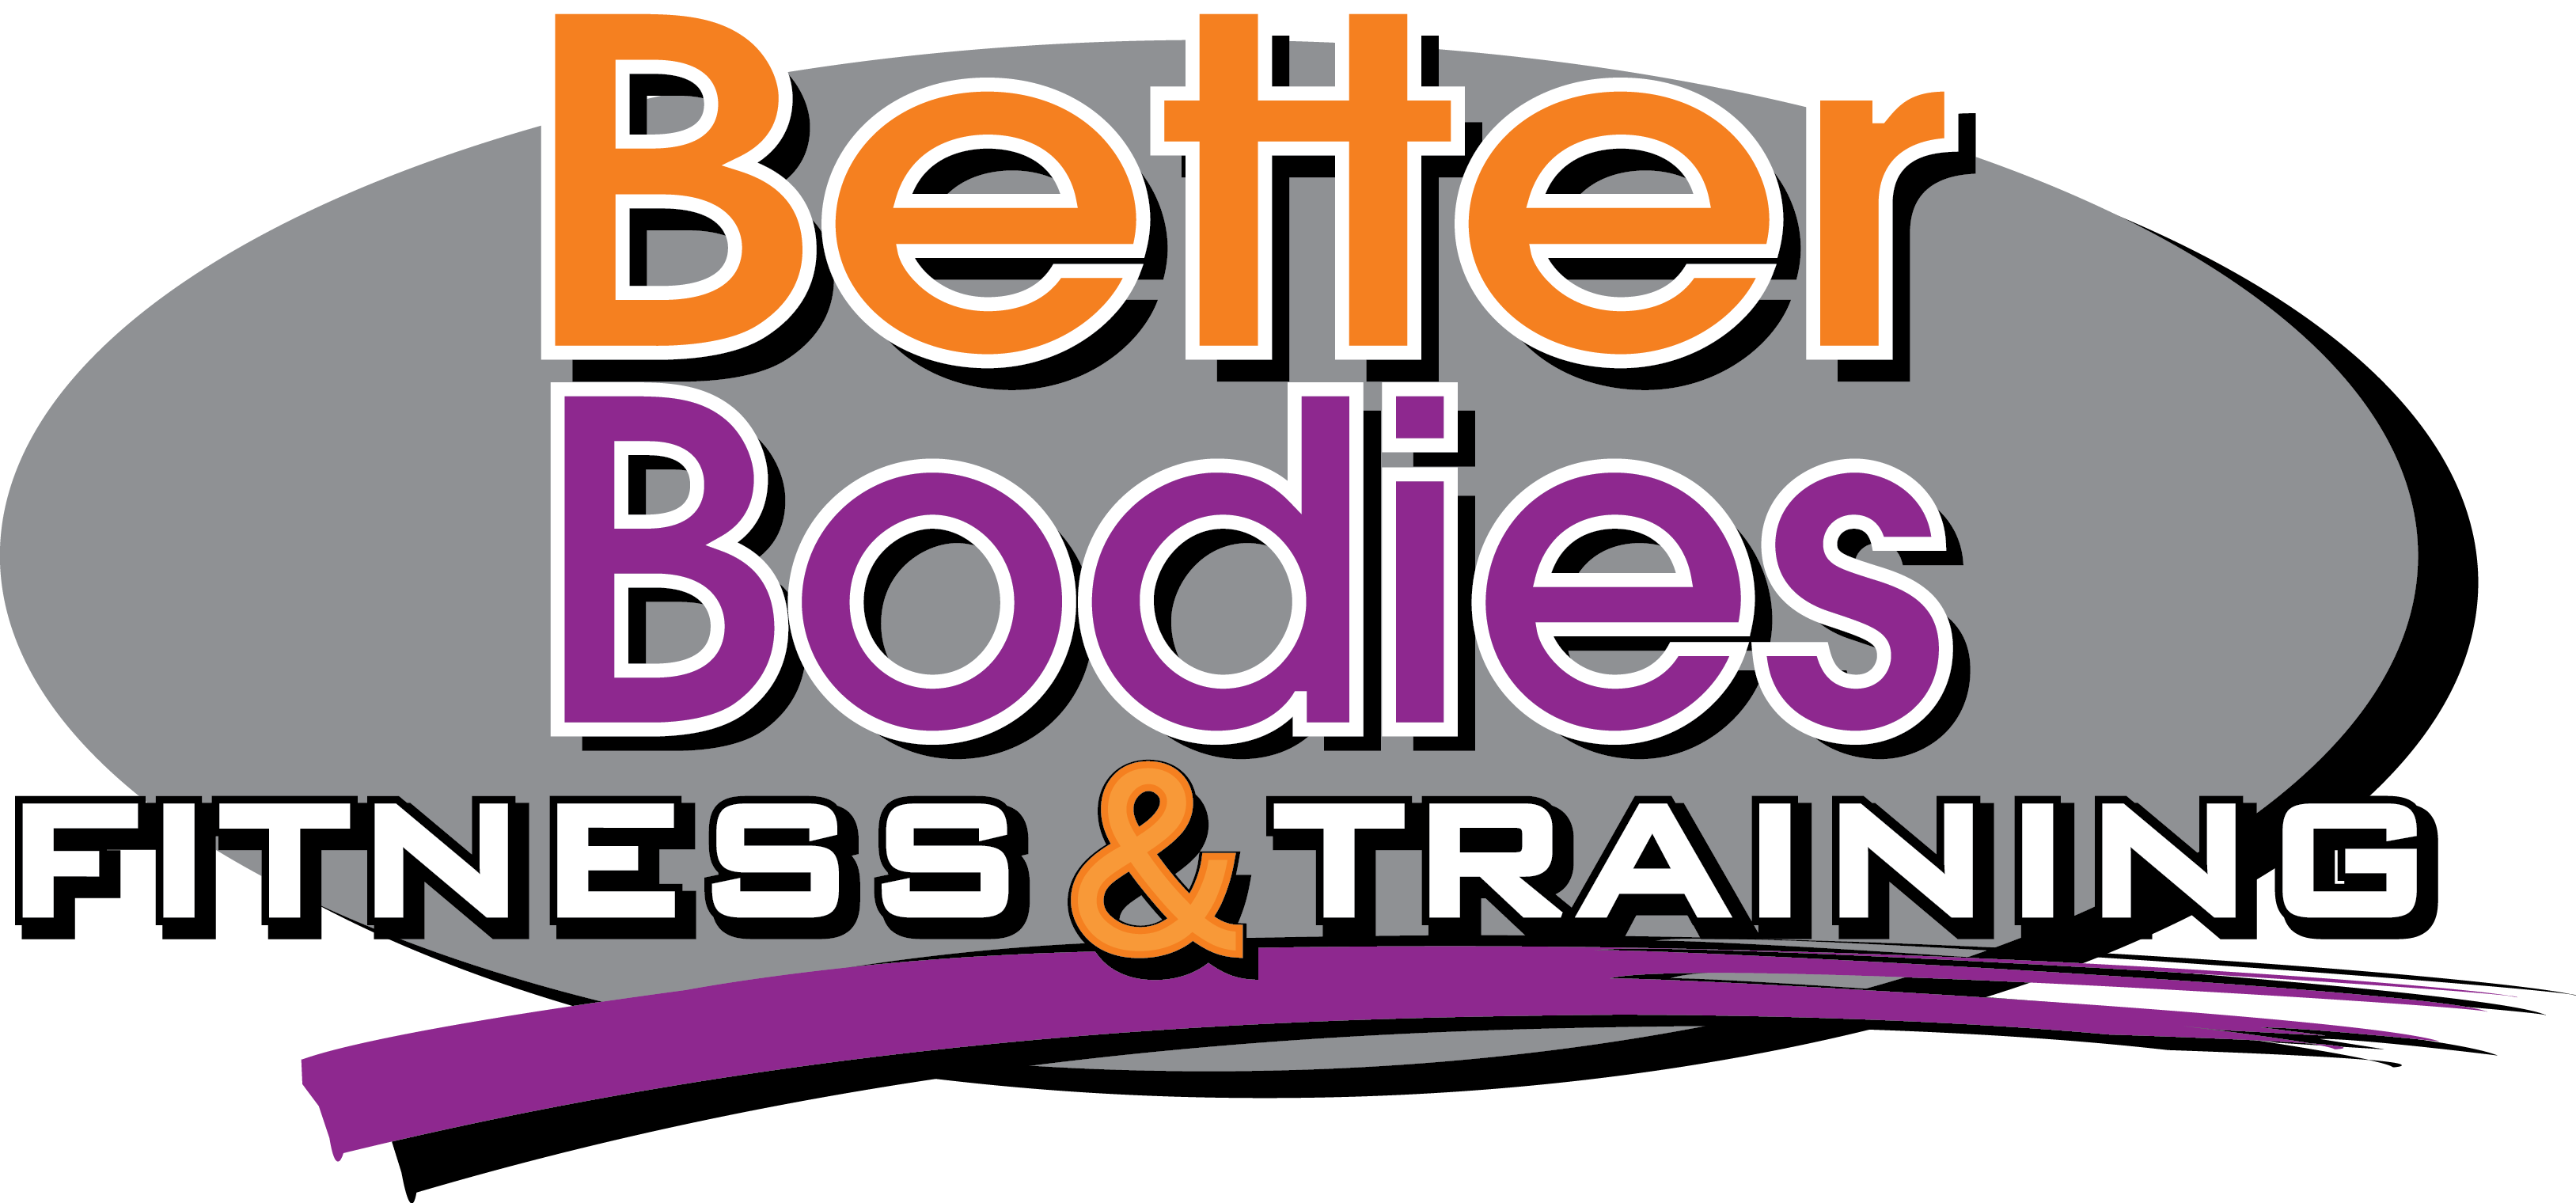 Better Bodies Fitness & Training - Better Bodies Fitness (3255x1520)